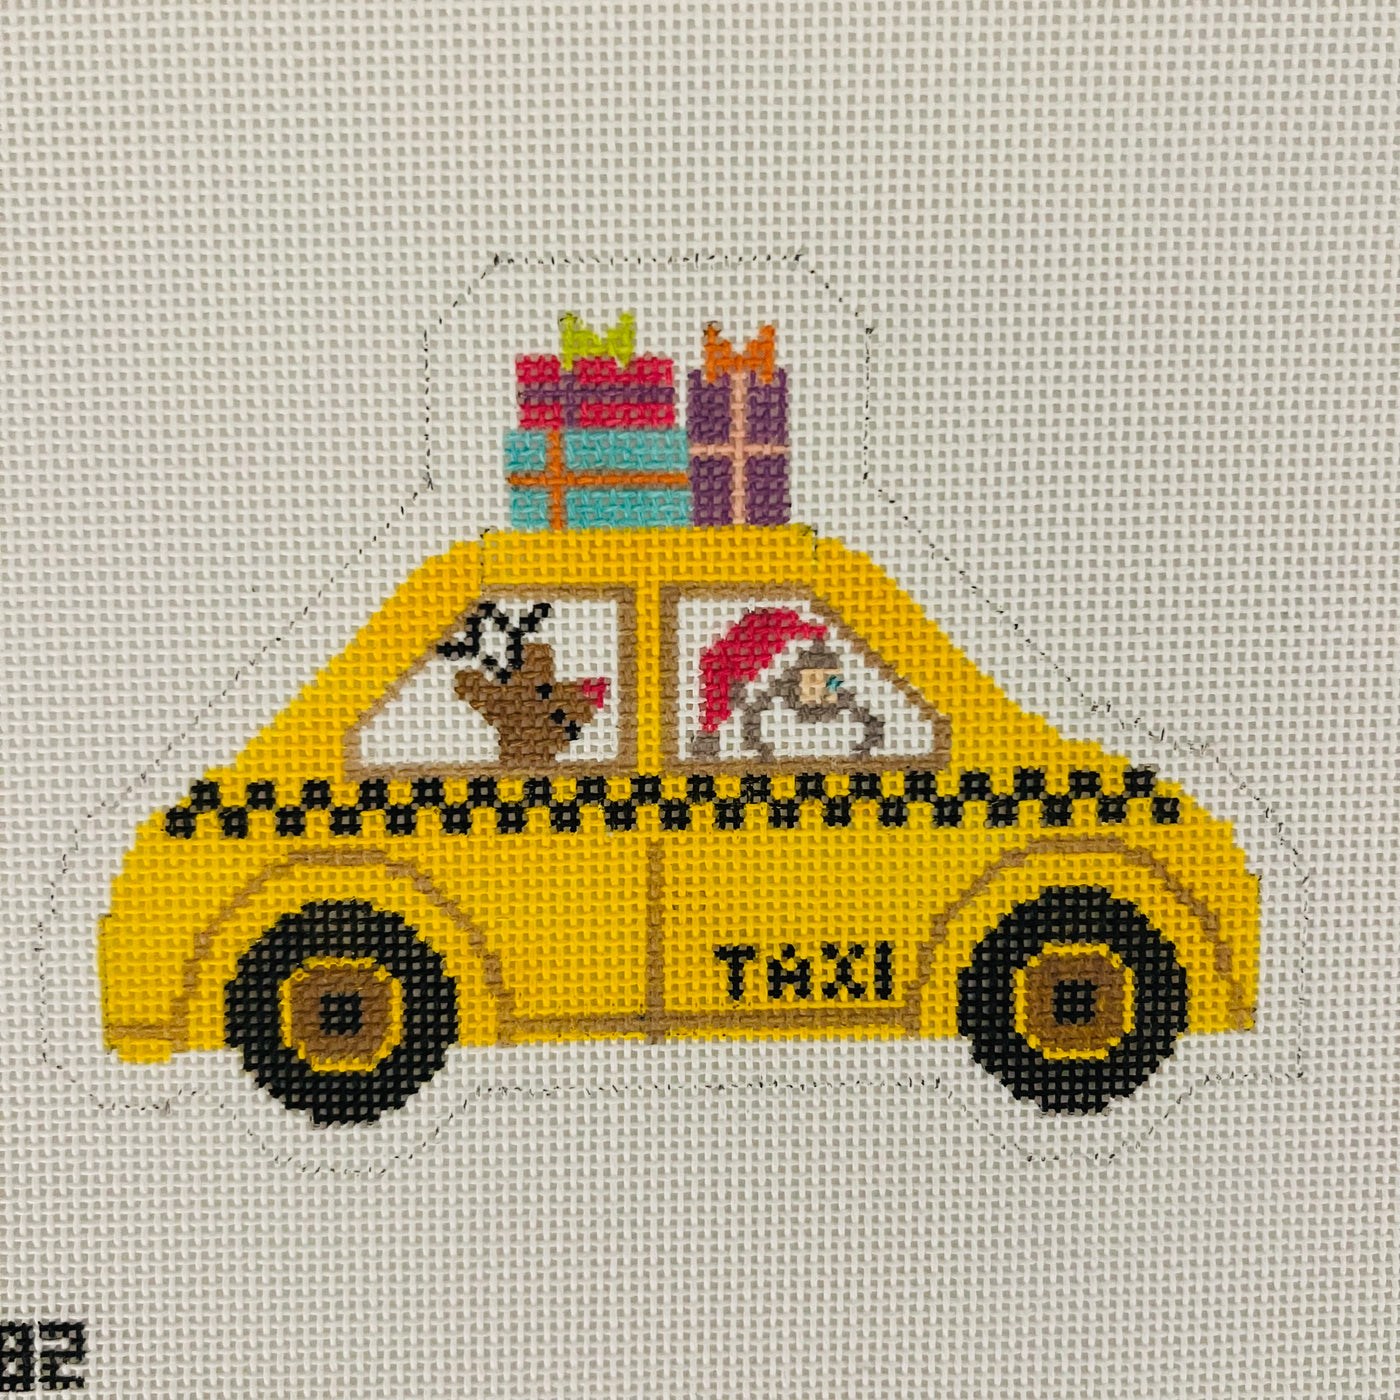 Taxi Cab Ornament Needlepoint Canvas